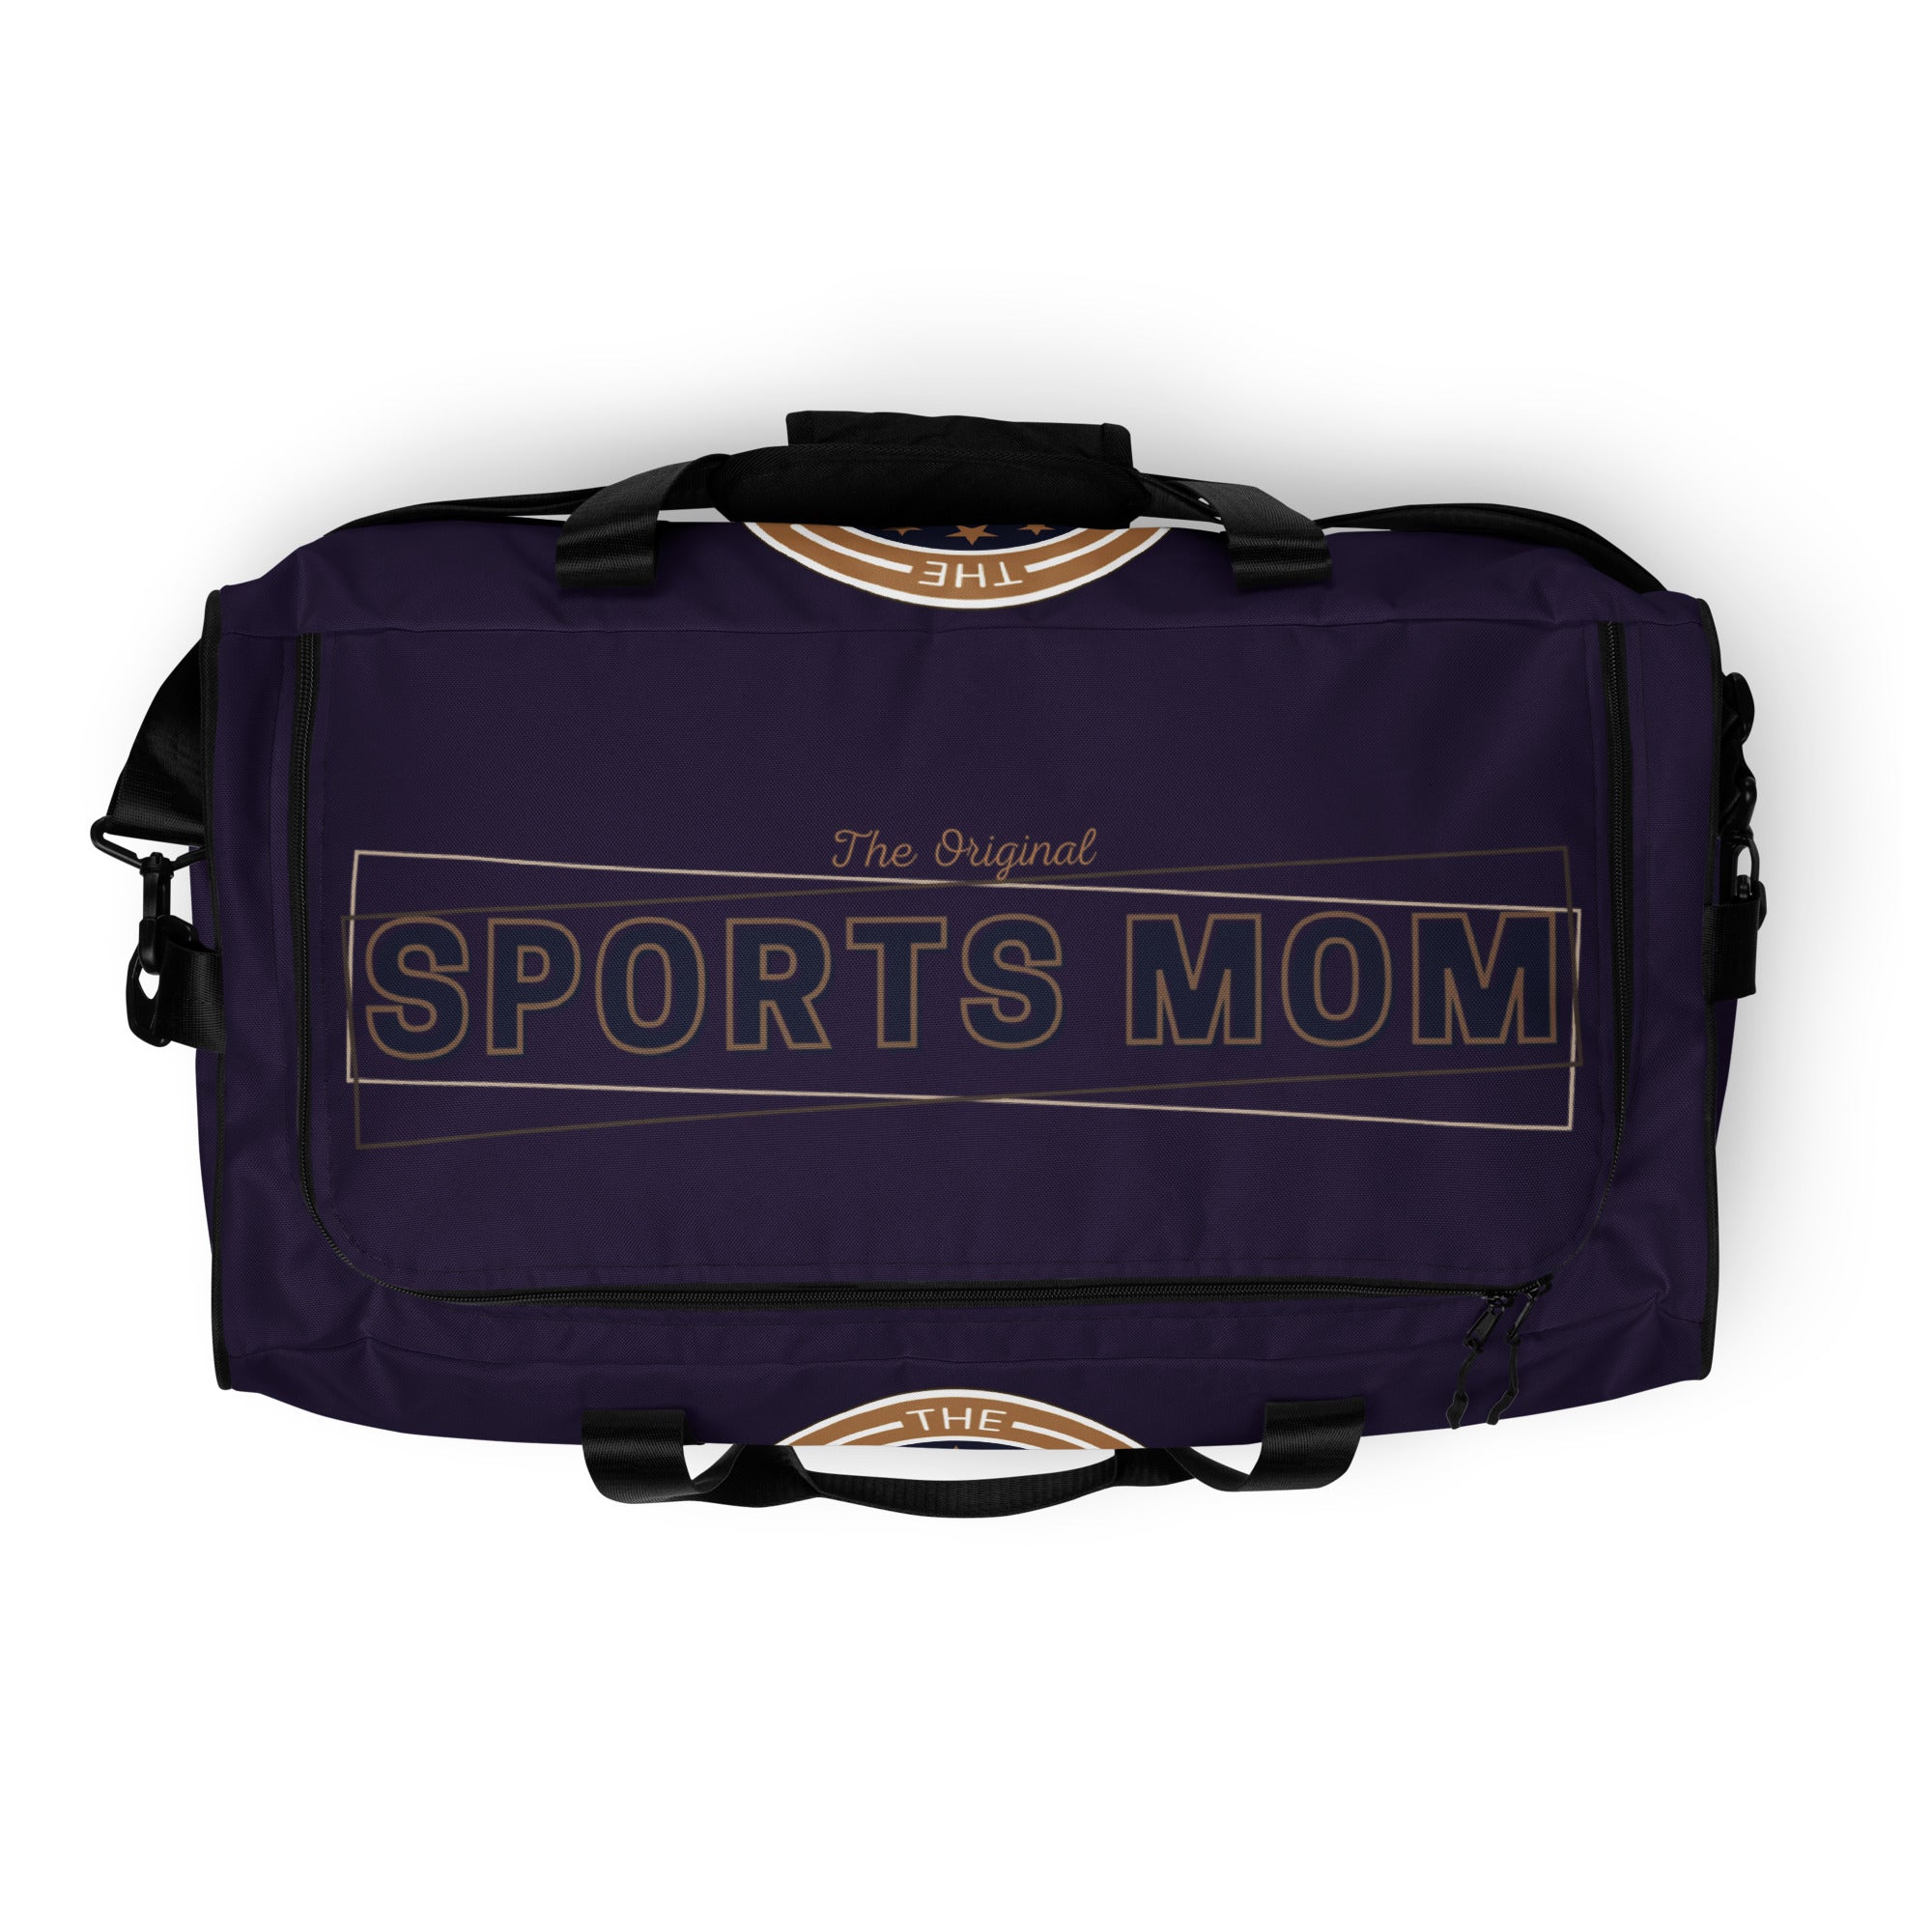 Sports Mom - Away Game - Ultimate Duffle Bag - Tolopea